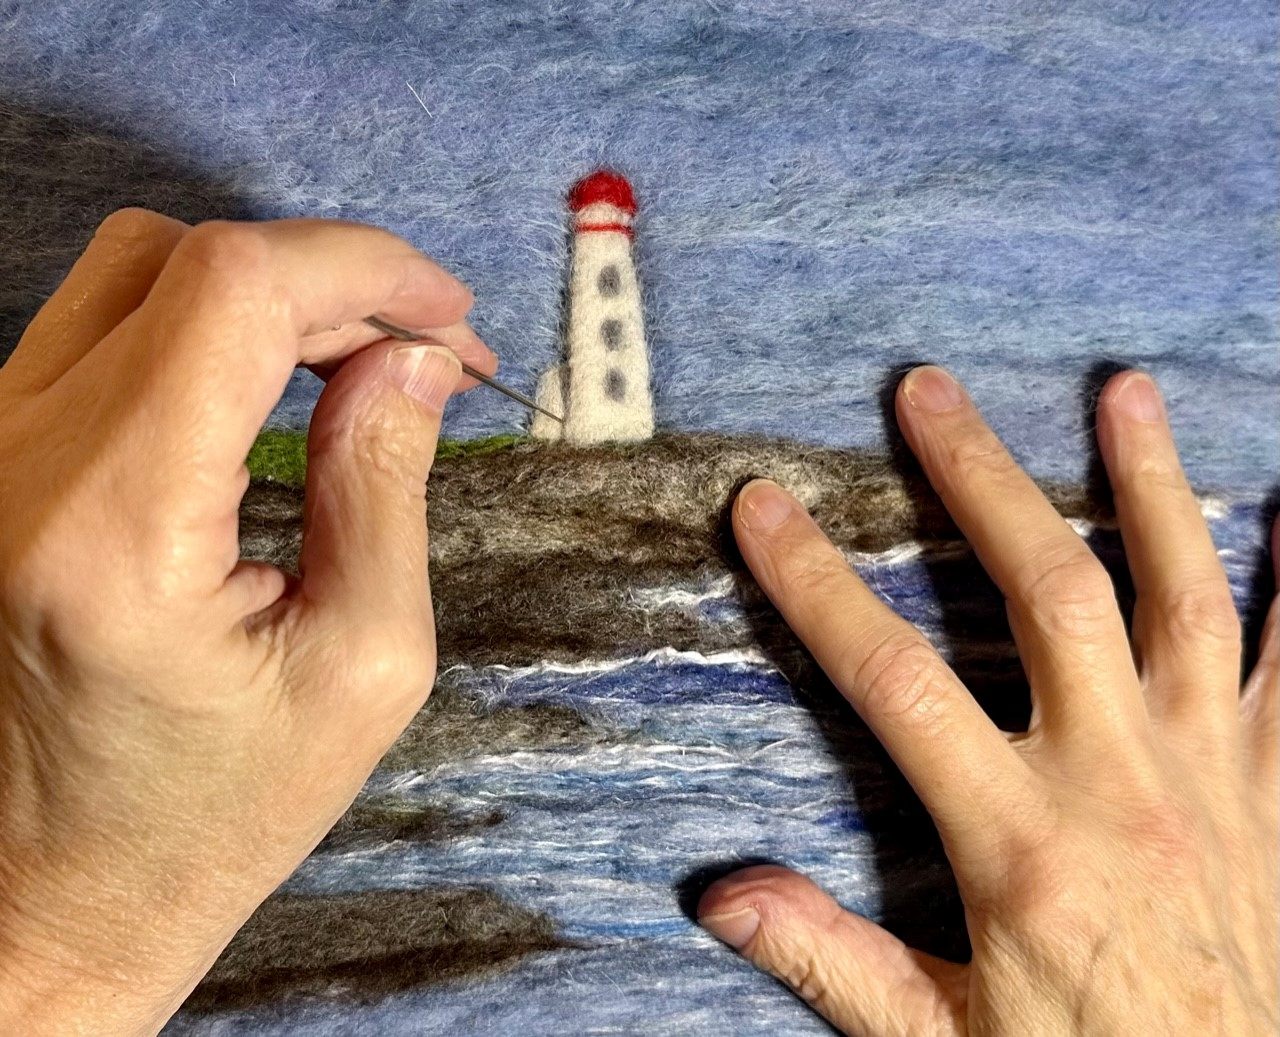 hands needle felting a landscape art work